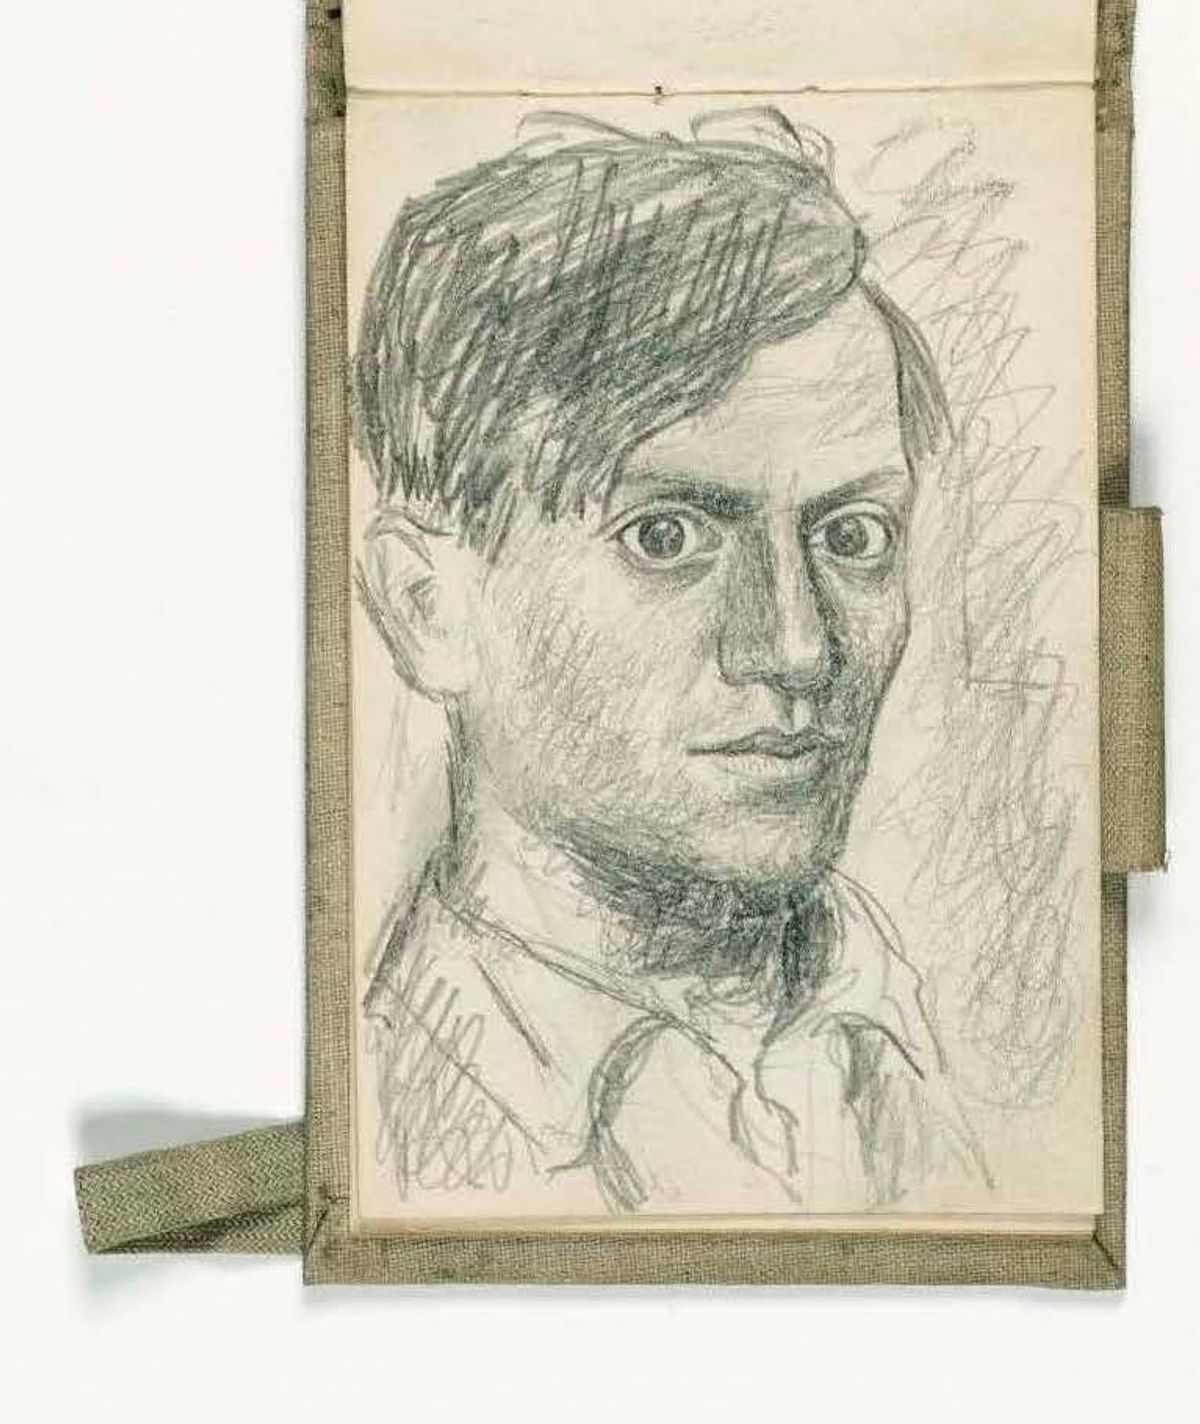 Pablo Picasso, Self Portrait from Carnet 214, Paris-Biarritz, summer-autumn 1918 

© FABA; Photo: Marc Domage / 2023 Estate of Pablo Picasso-ARS New York